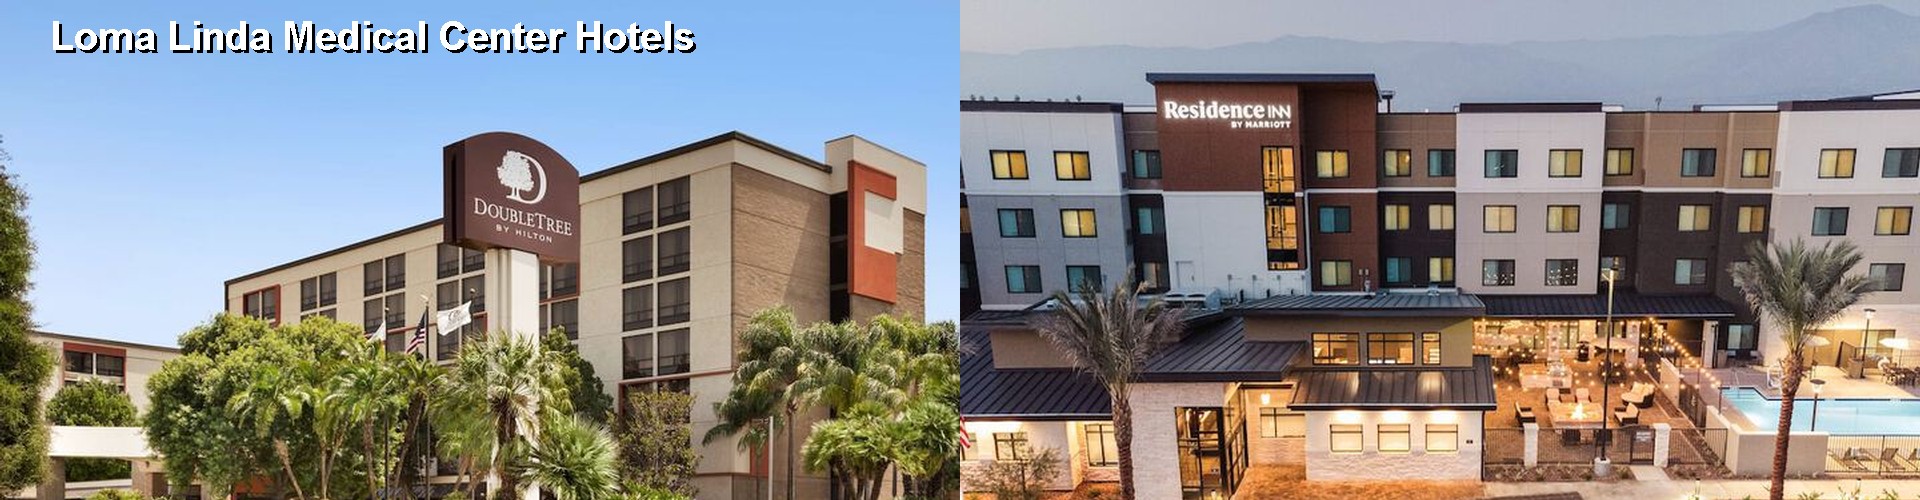 5 Best Hotels near Loma Linda Medical Center